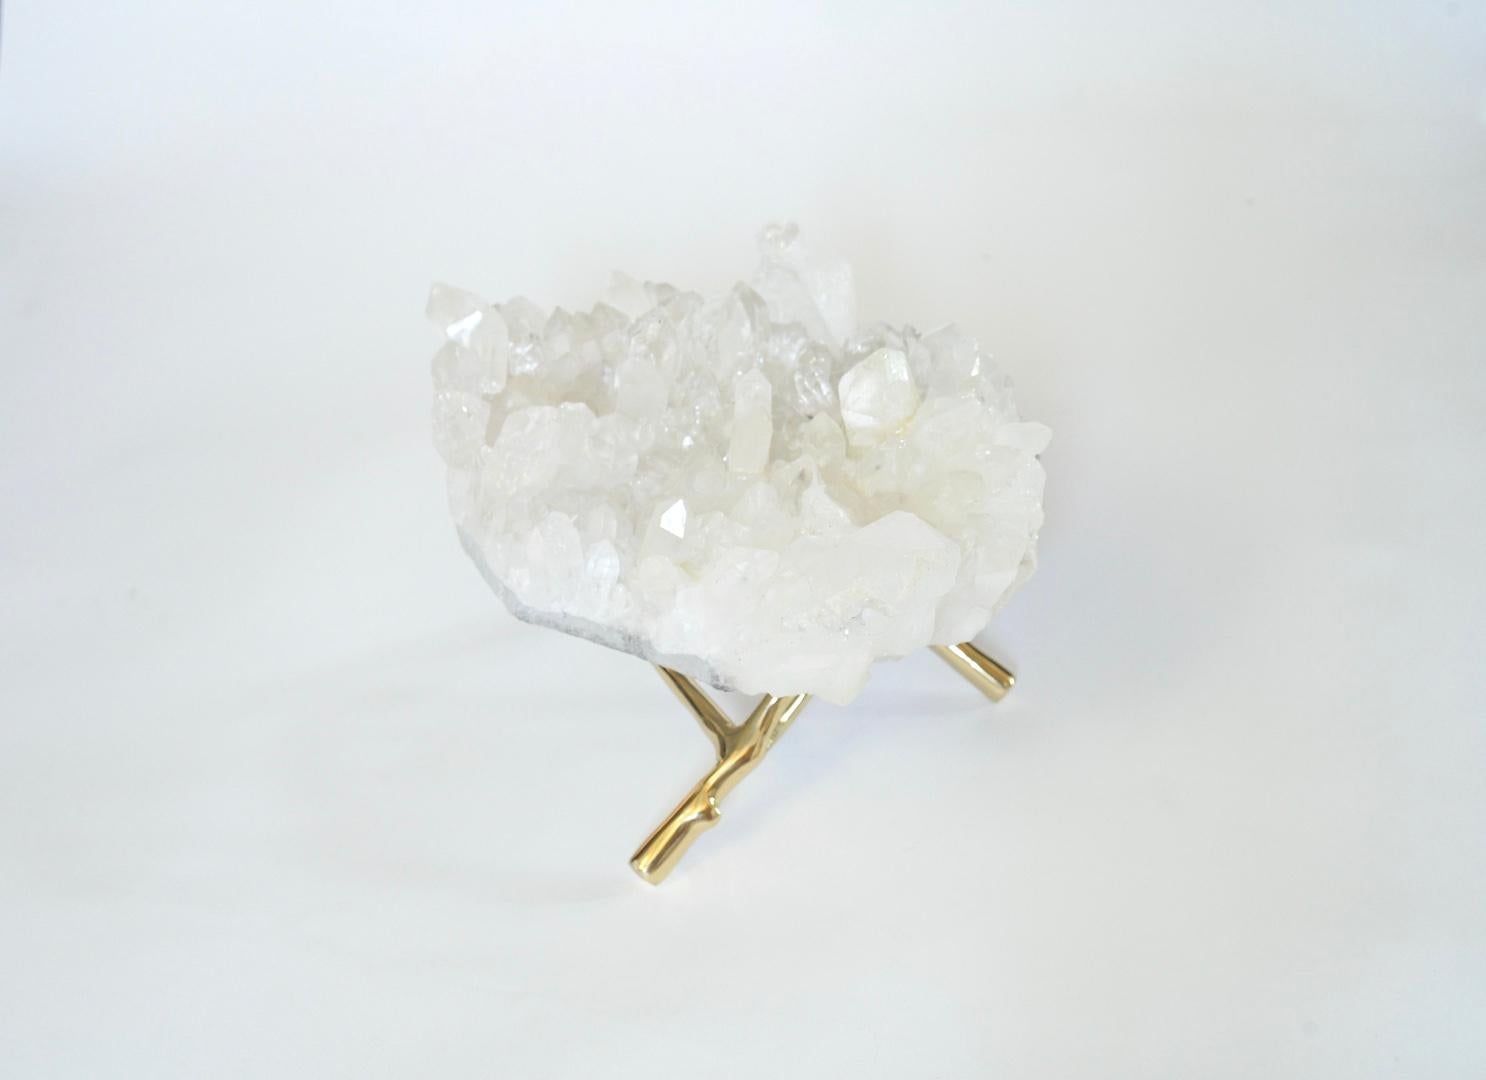 Une grappe de cristal de roche naturel avec un support en laiton poli.
Mesures : I 12